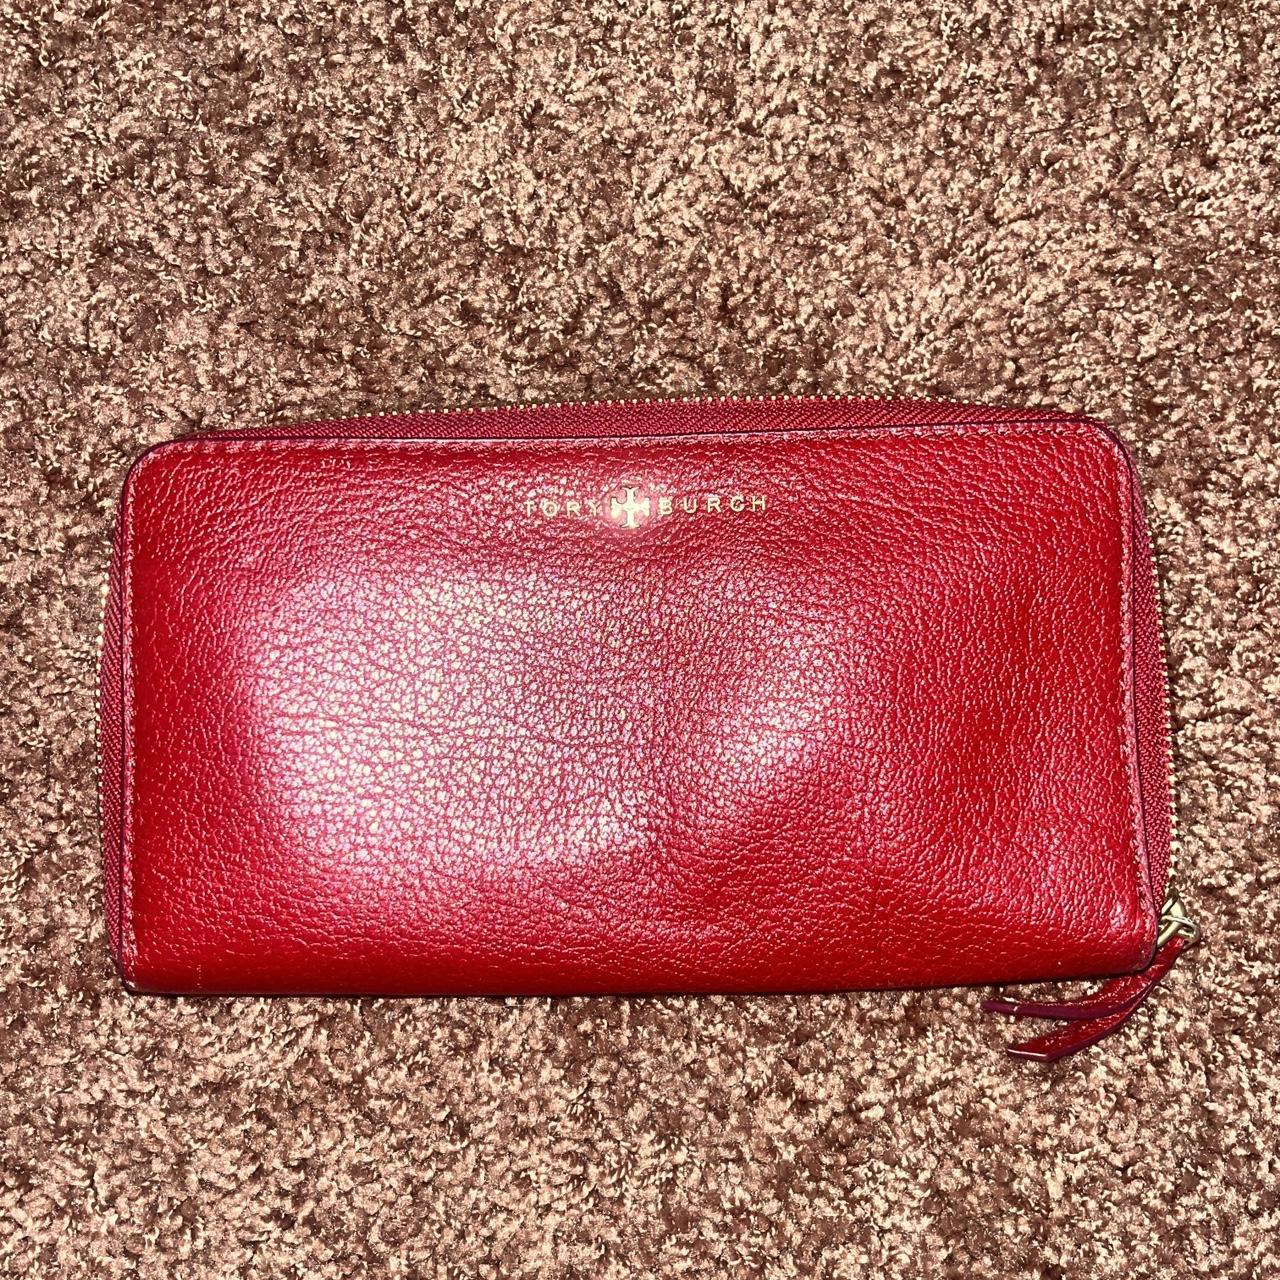 vintage red tory burch wallet used but in great... - Depop